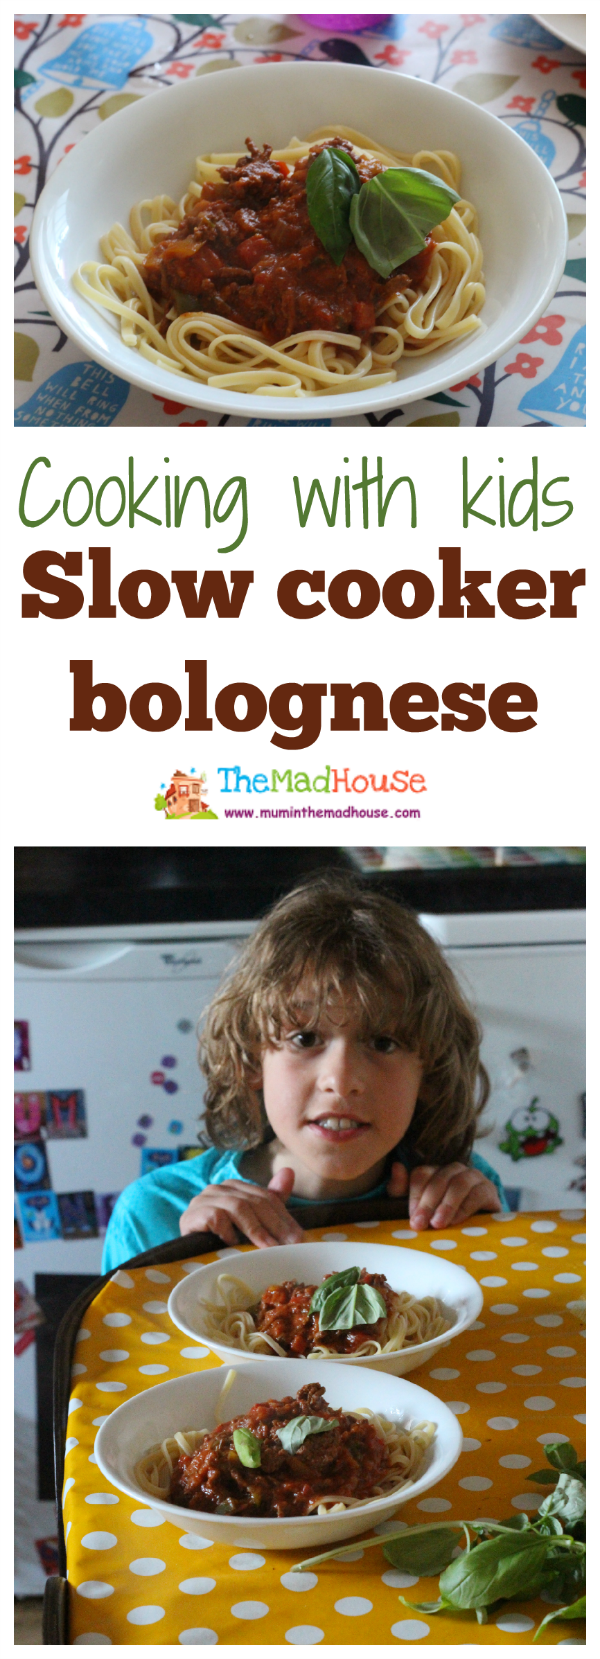 slow cooker bolognese